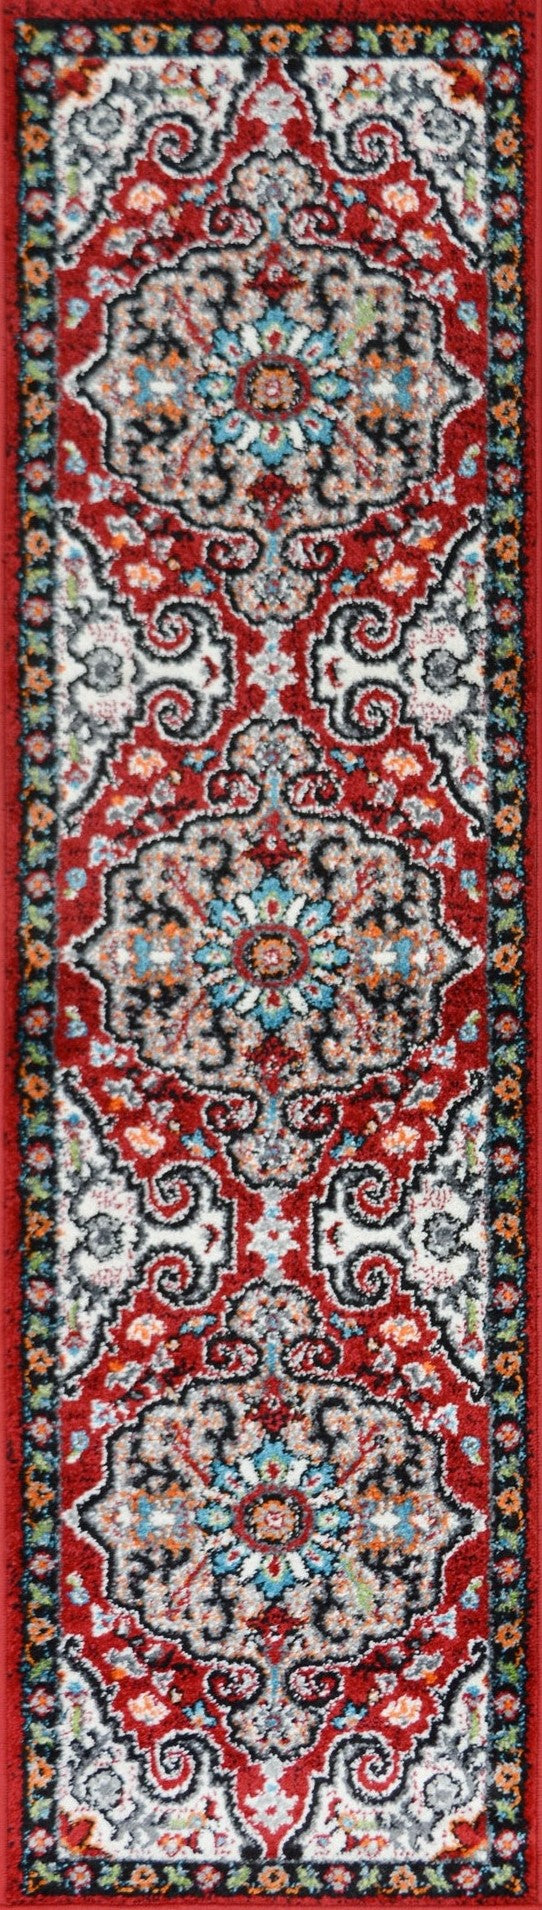 American cover design / Persian weavers Ibiza 183 Volcano Rug